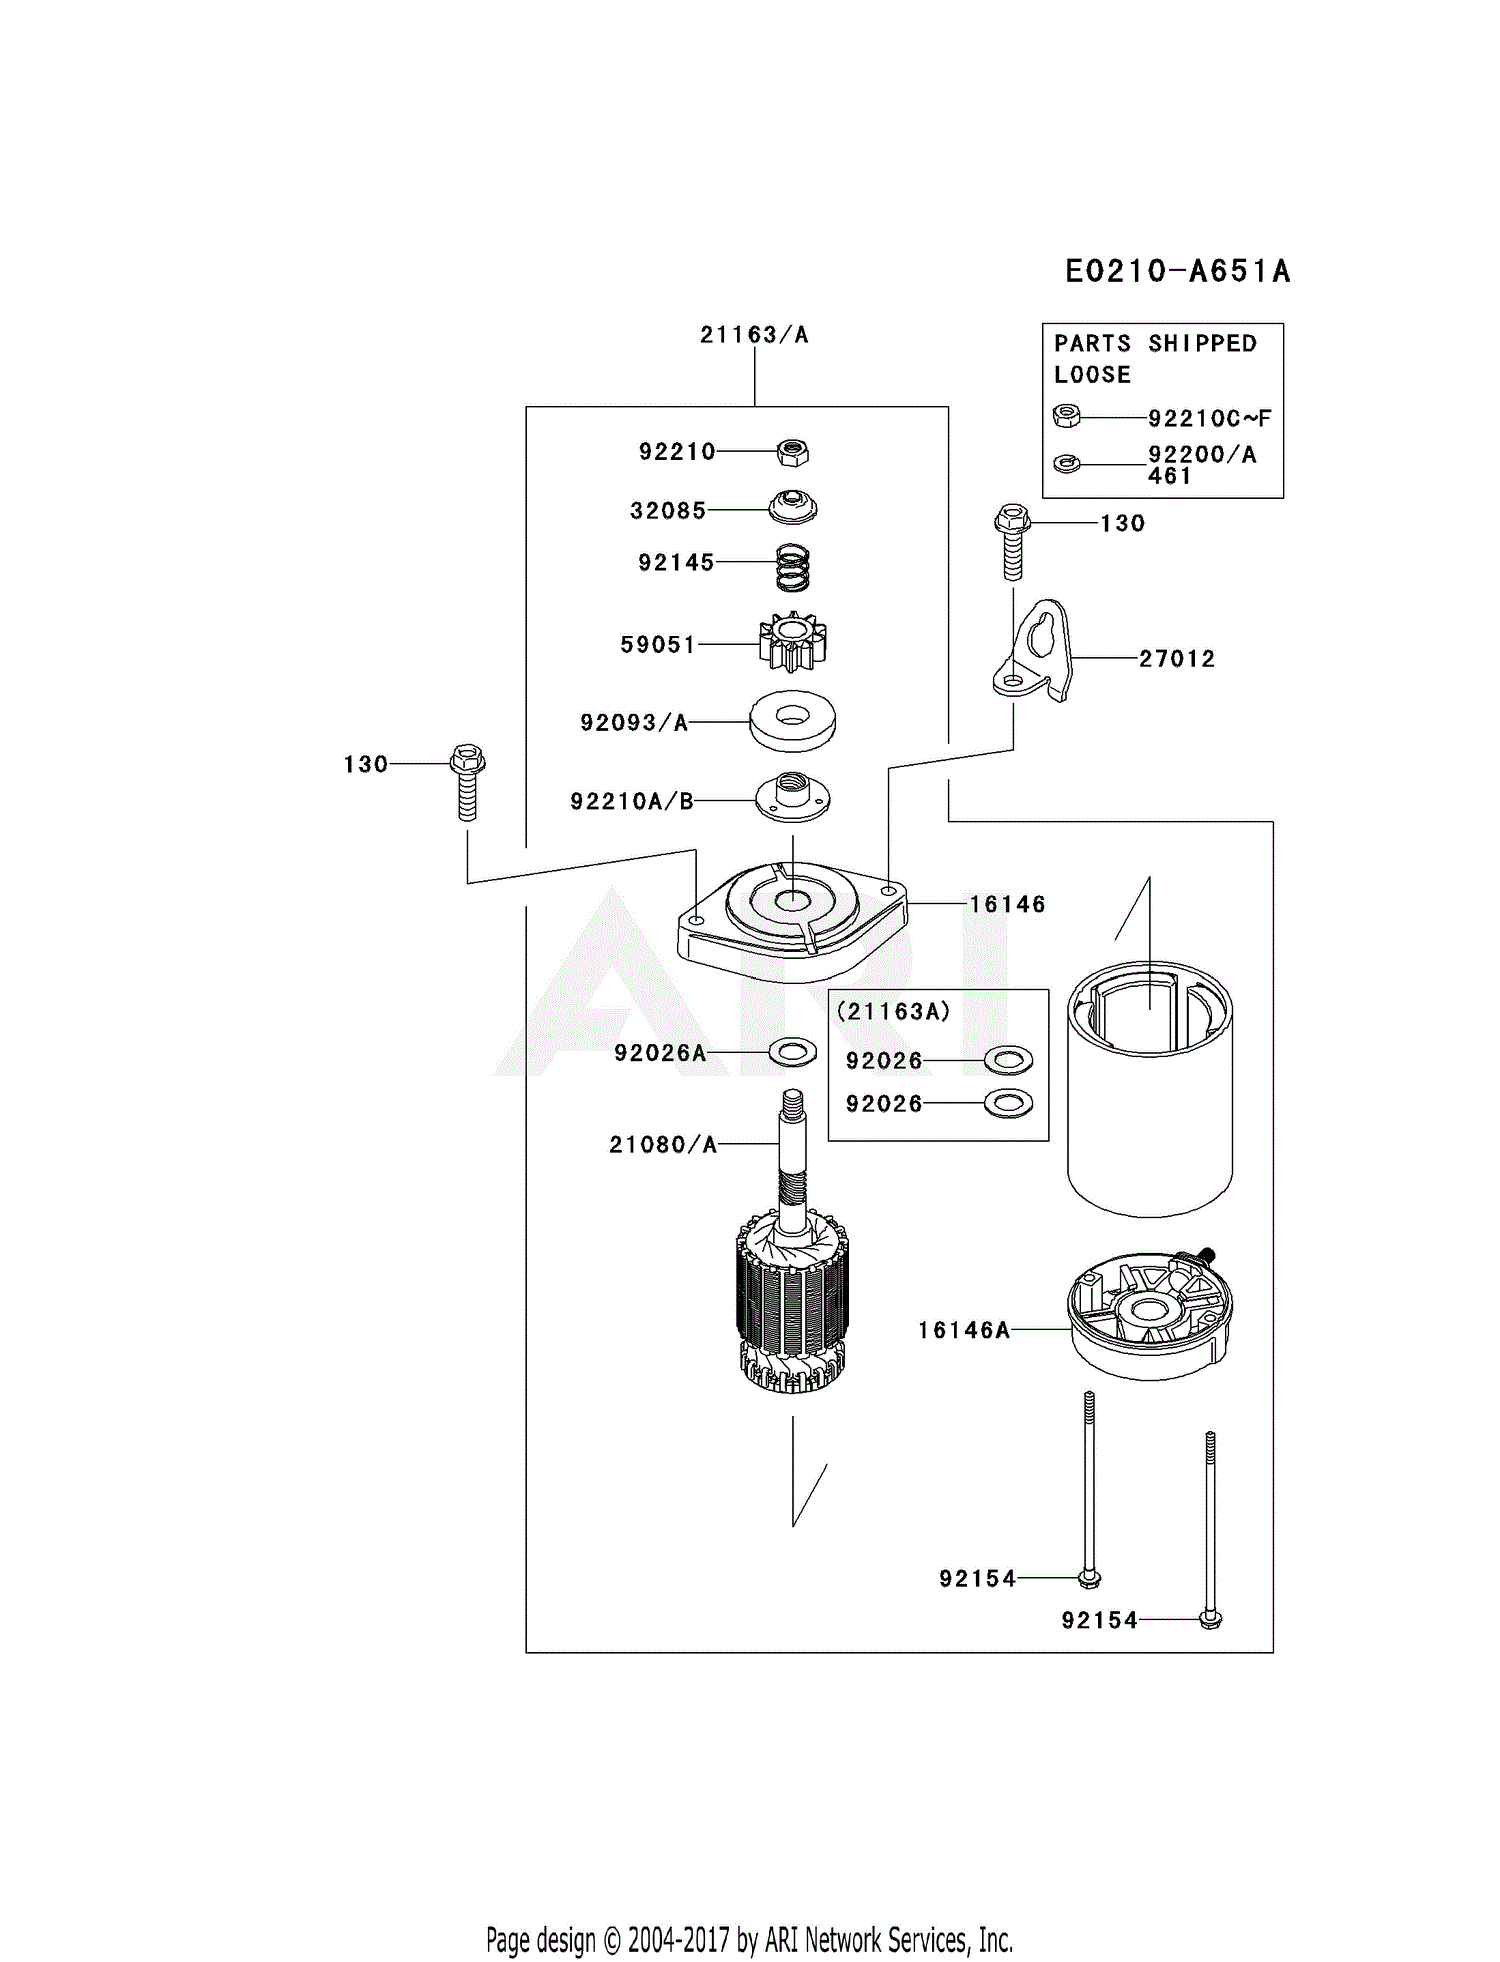 Kawasaki FR541V-AS04 4 Stroke Engine FR541V Parts Diagram ... kawasaki engine parts diagrams 